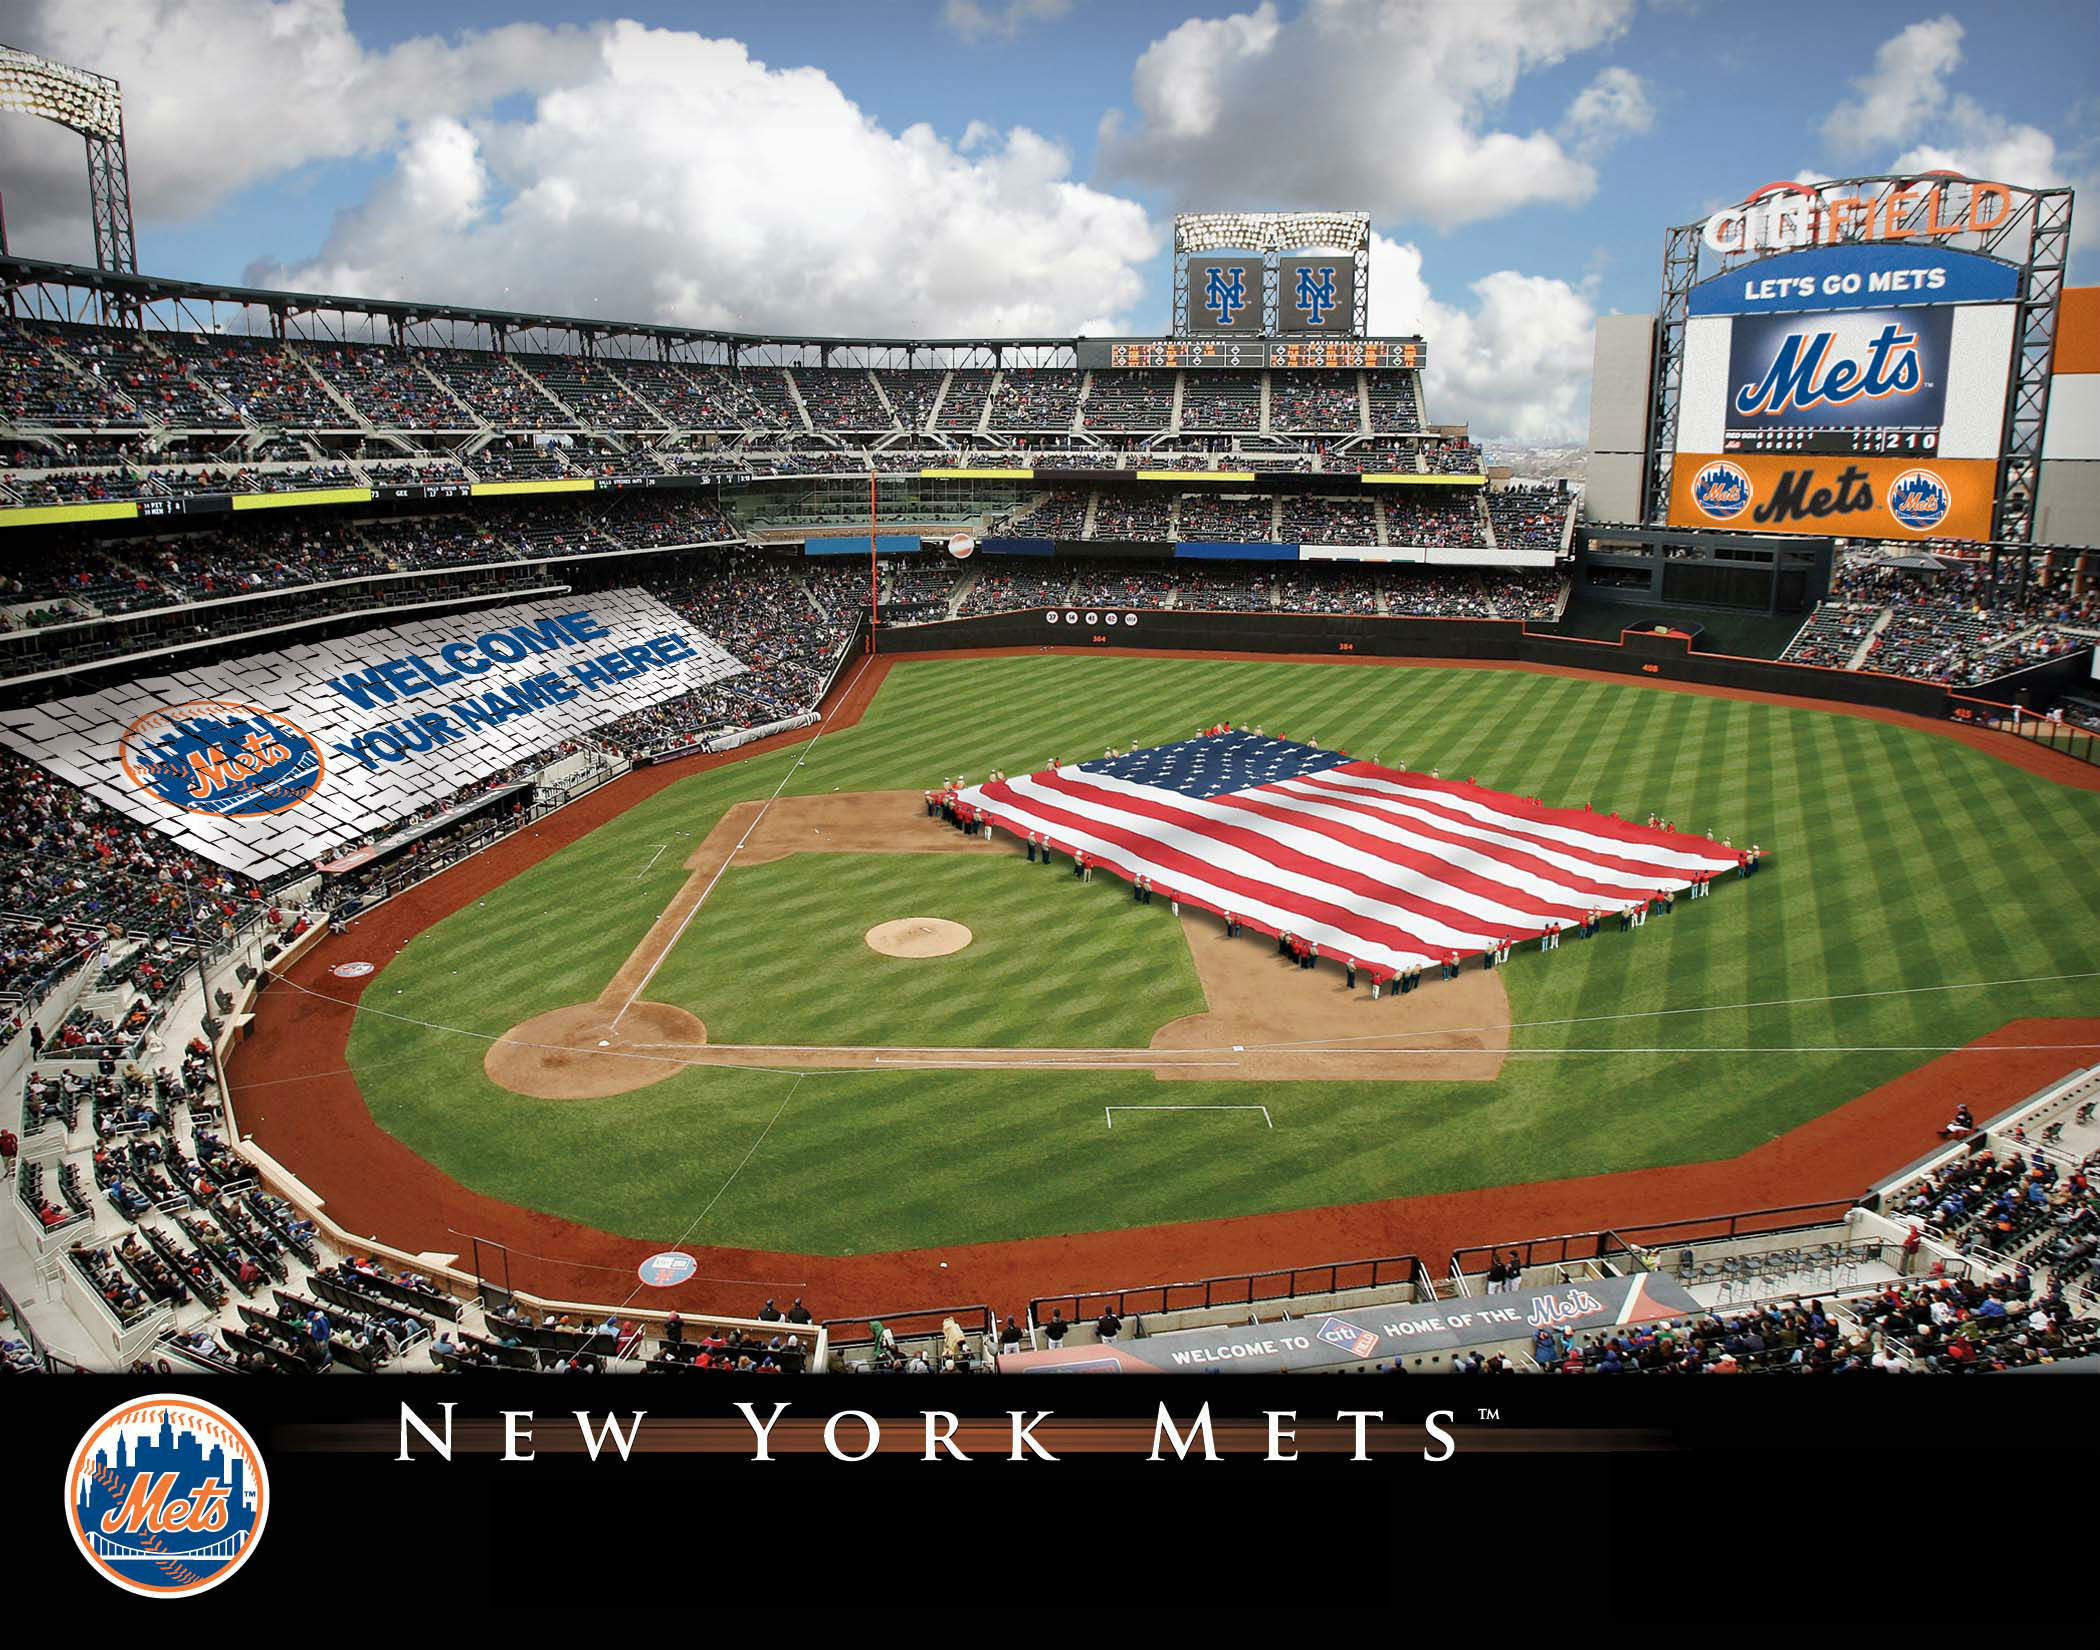 NEW YORK METS baseball mlb 13 wallpaper 2100x1650 232323